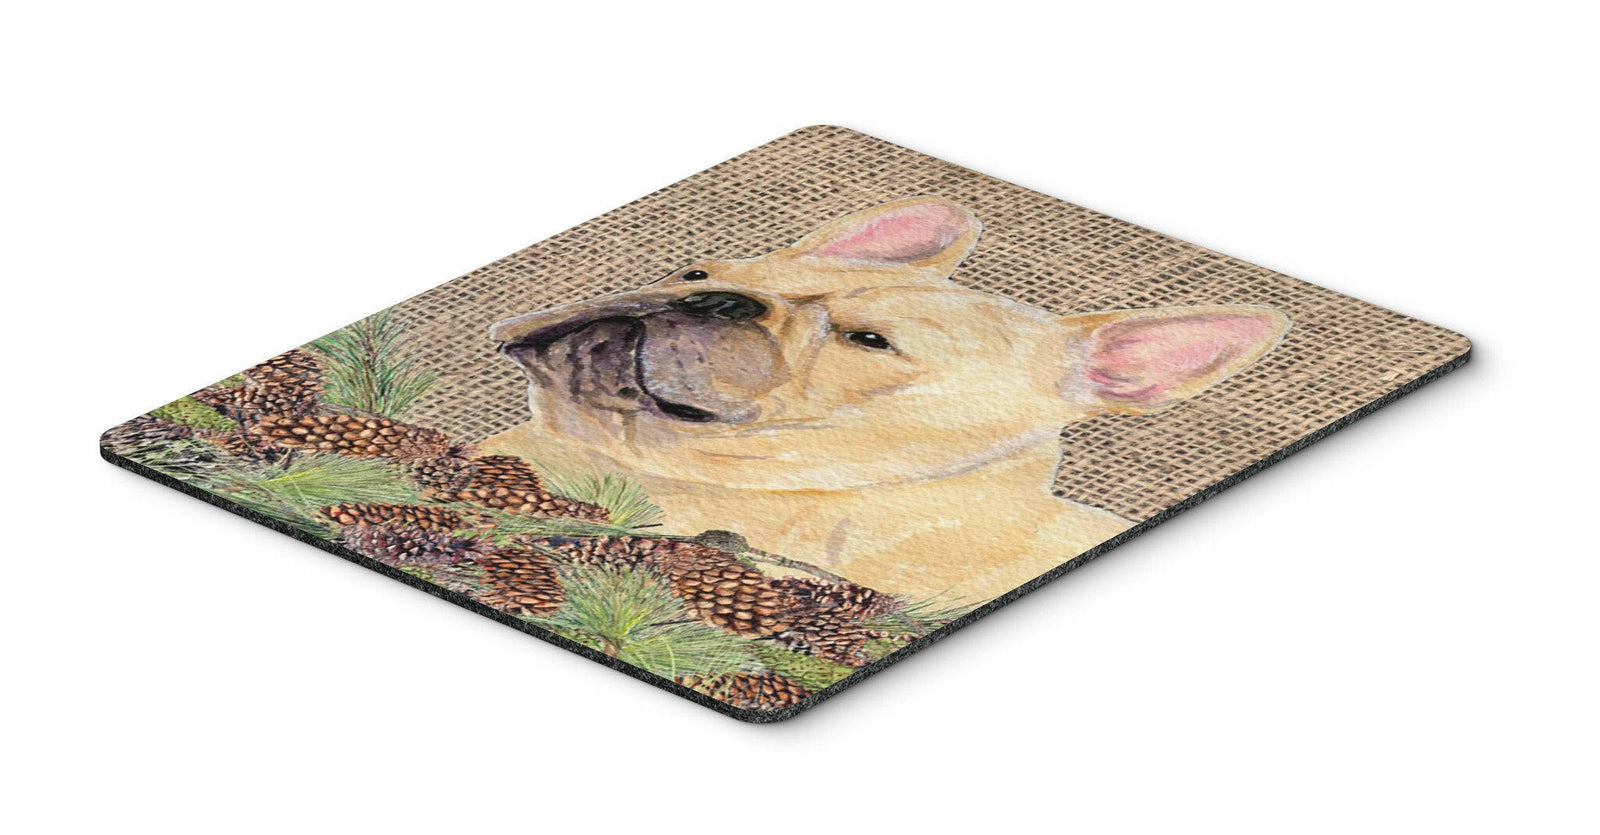 French Bulldog Mouse Pad, Hot Pad or Trivet by Caroline's Treasures